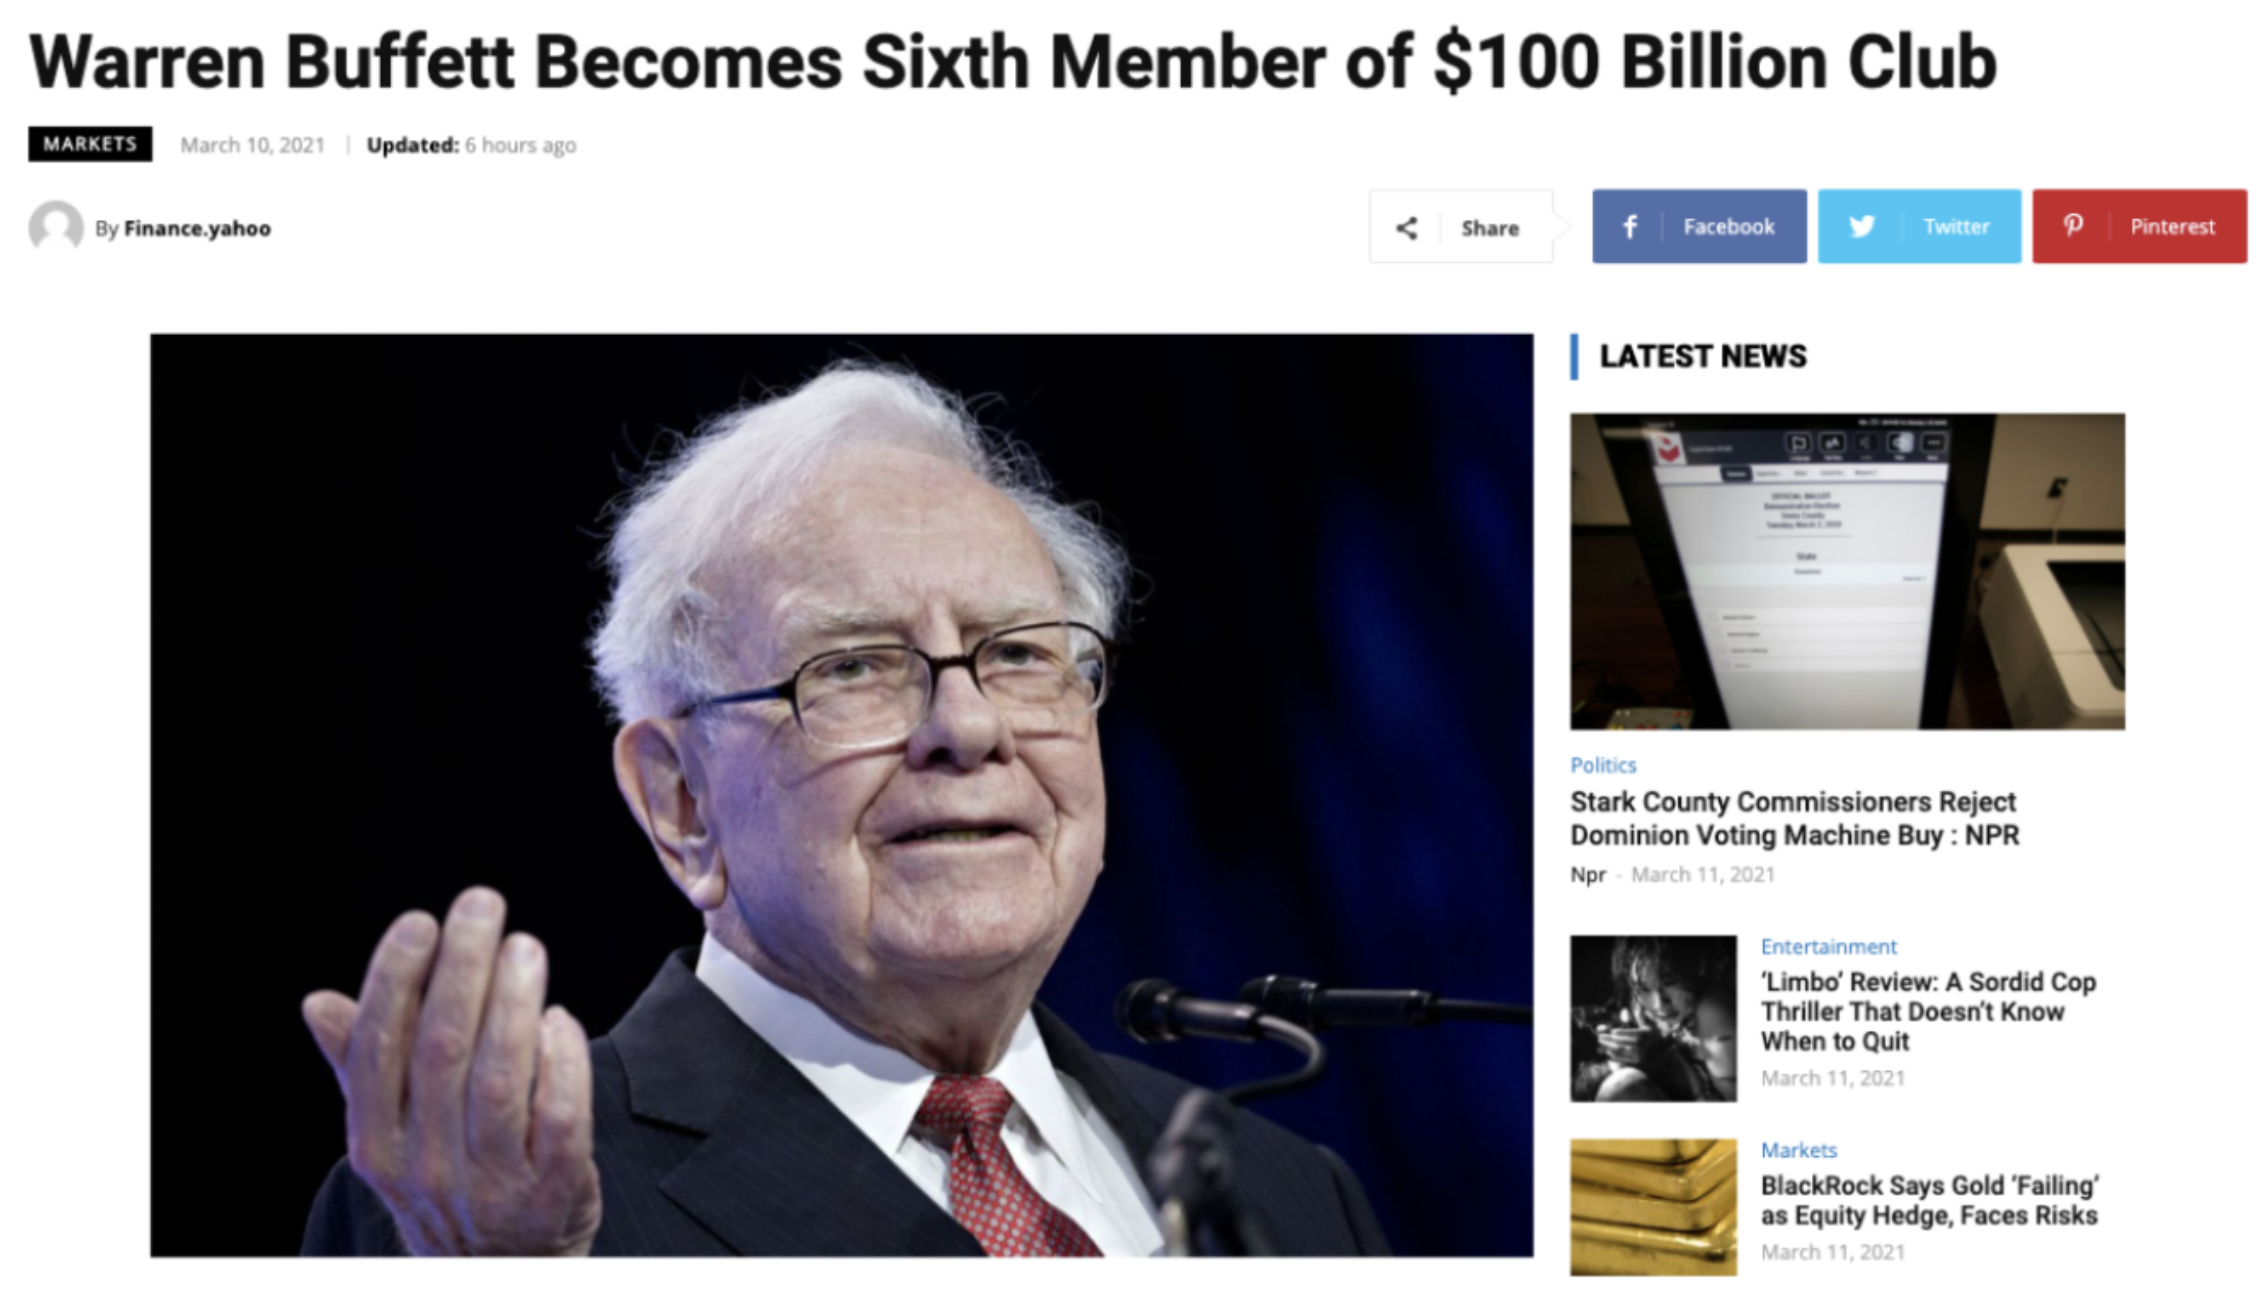 Warren Buffett Becomes Sixth Member of $100 Billion Club